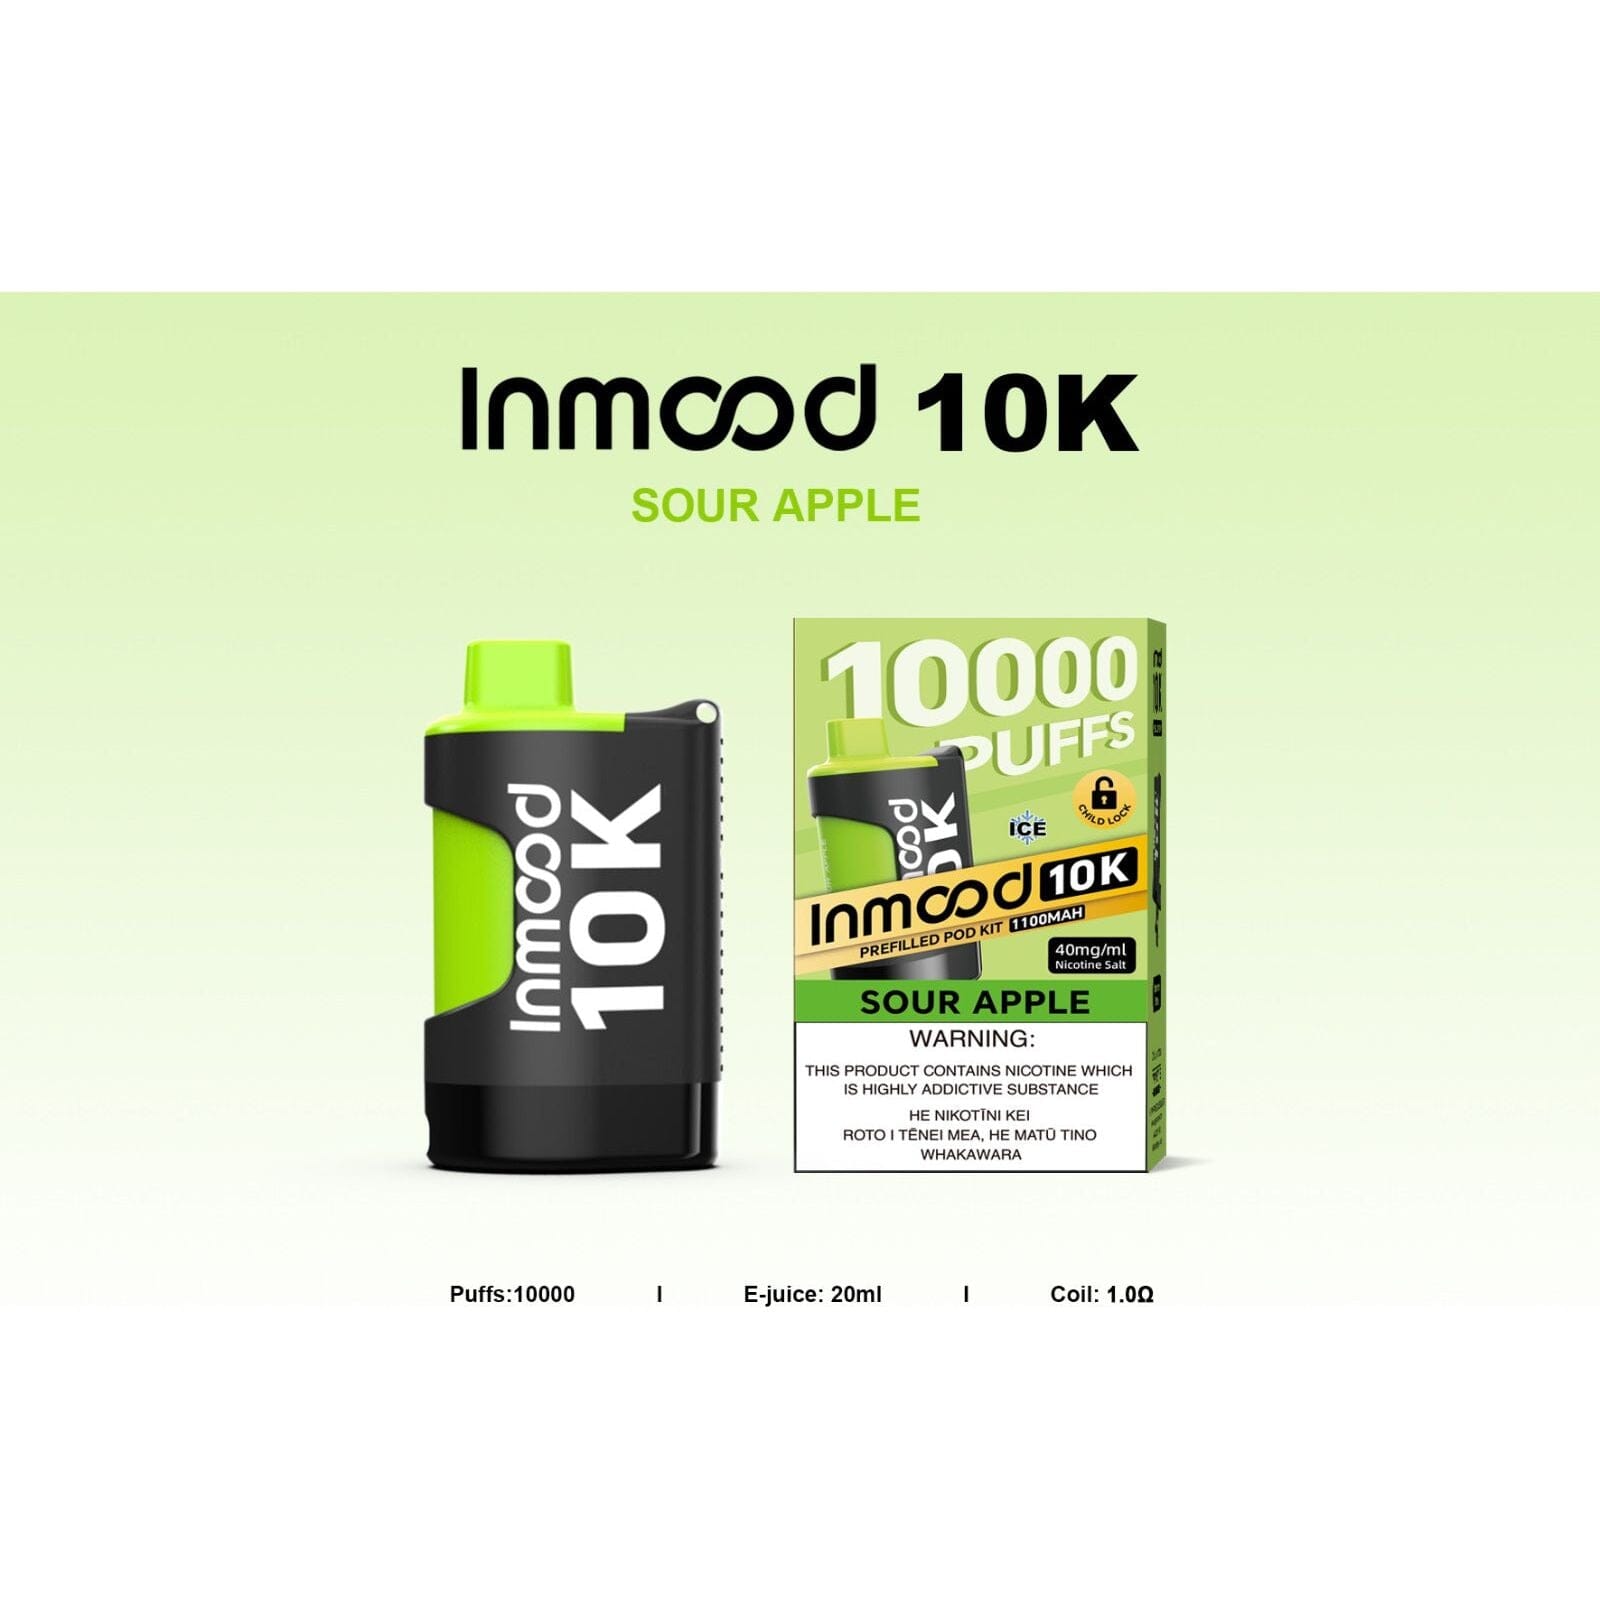 Inmood 10K Prefilled Pod Kit - Sour Apple - Vapoureyes